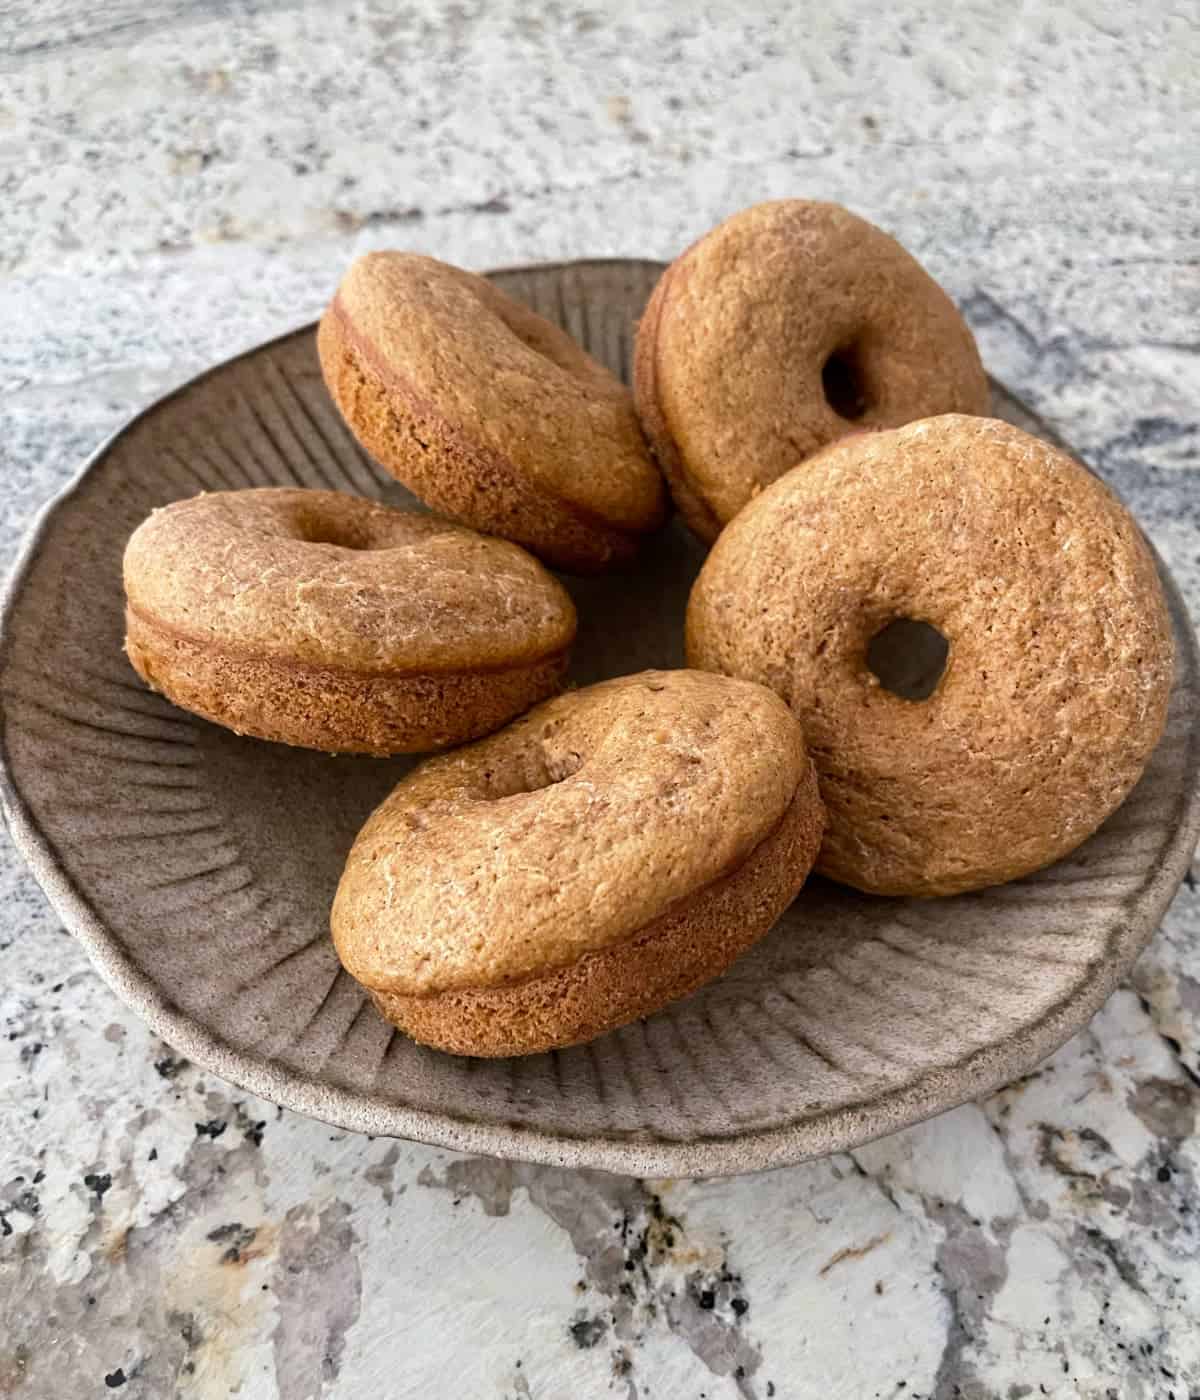 Fresh baked whole wheat donuts on ceramic serving platter on granite.